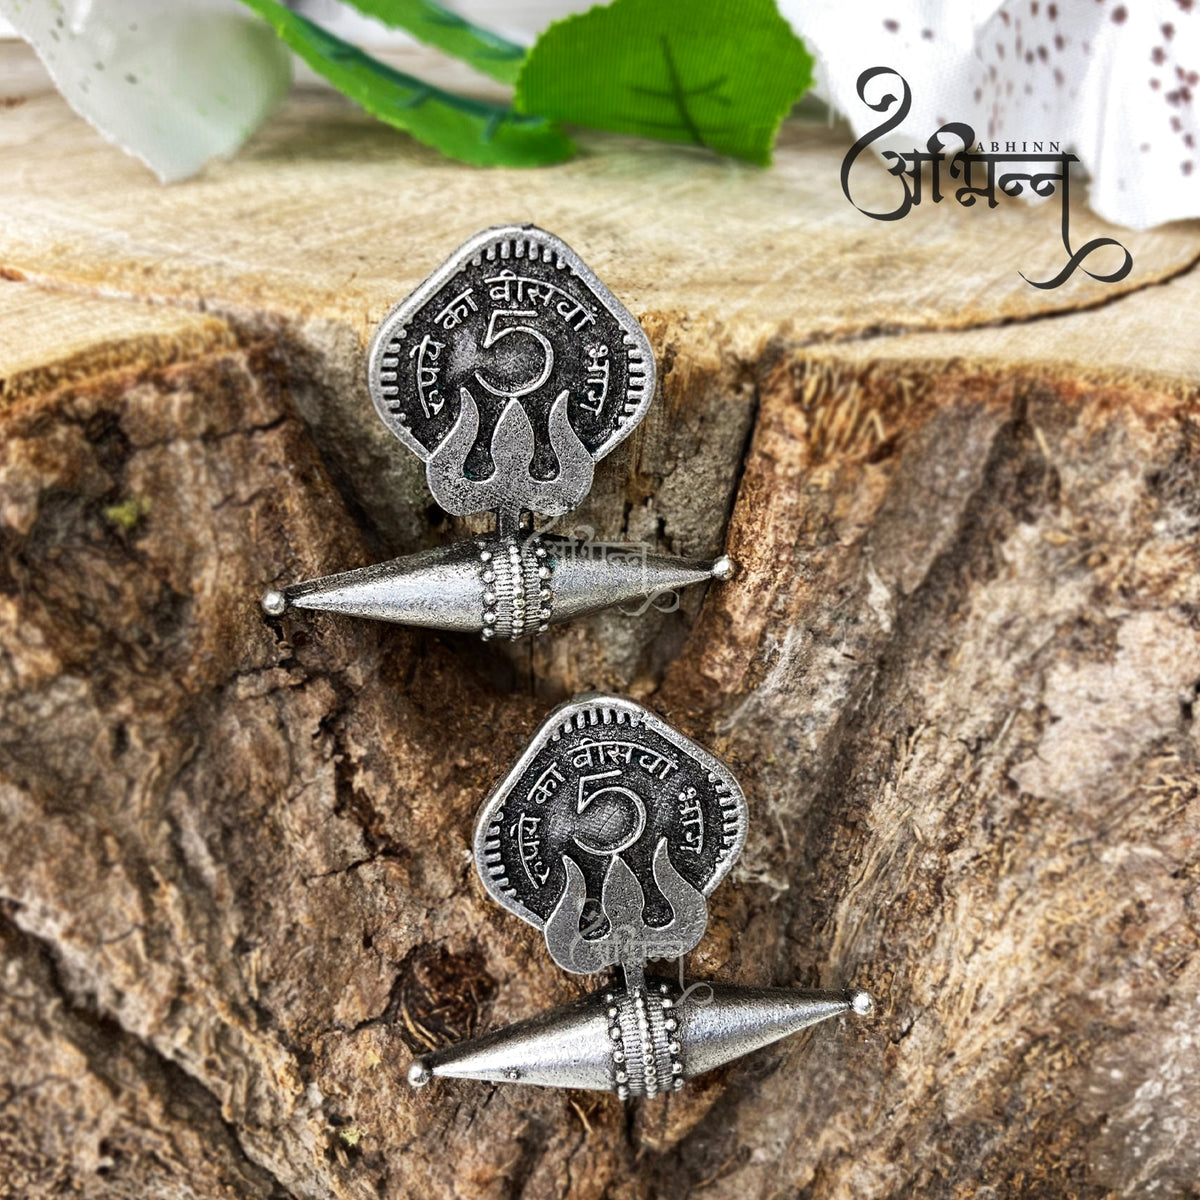 Abhinn Silver Replica Antique Coin Design Earrings For Women